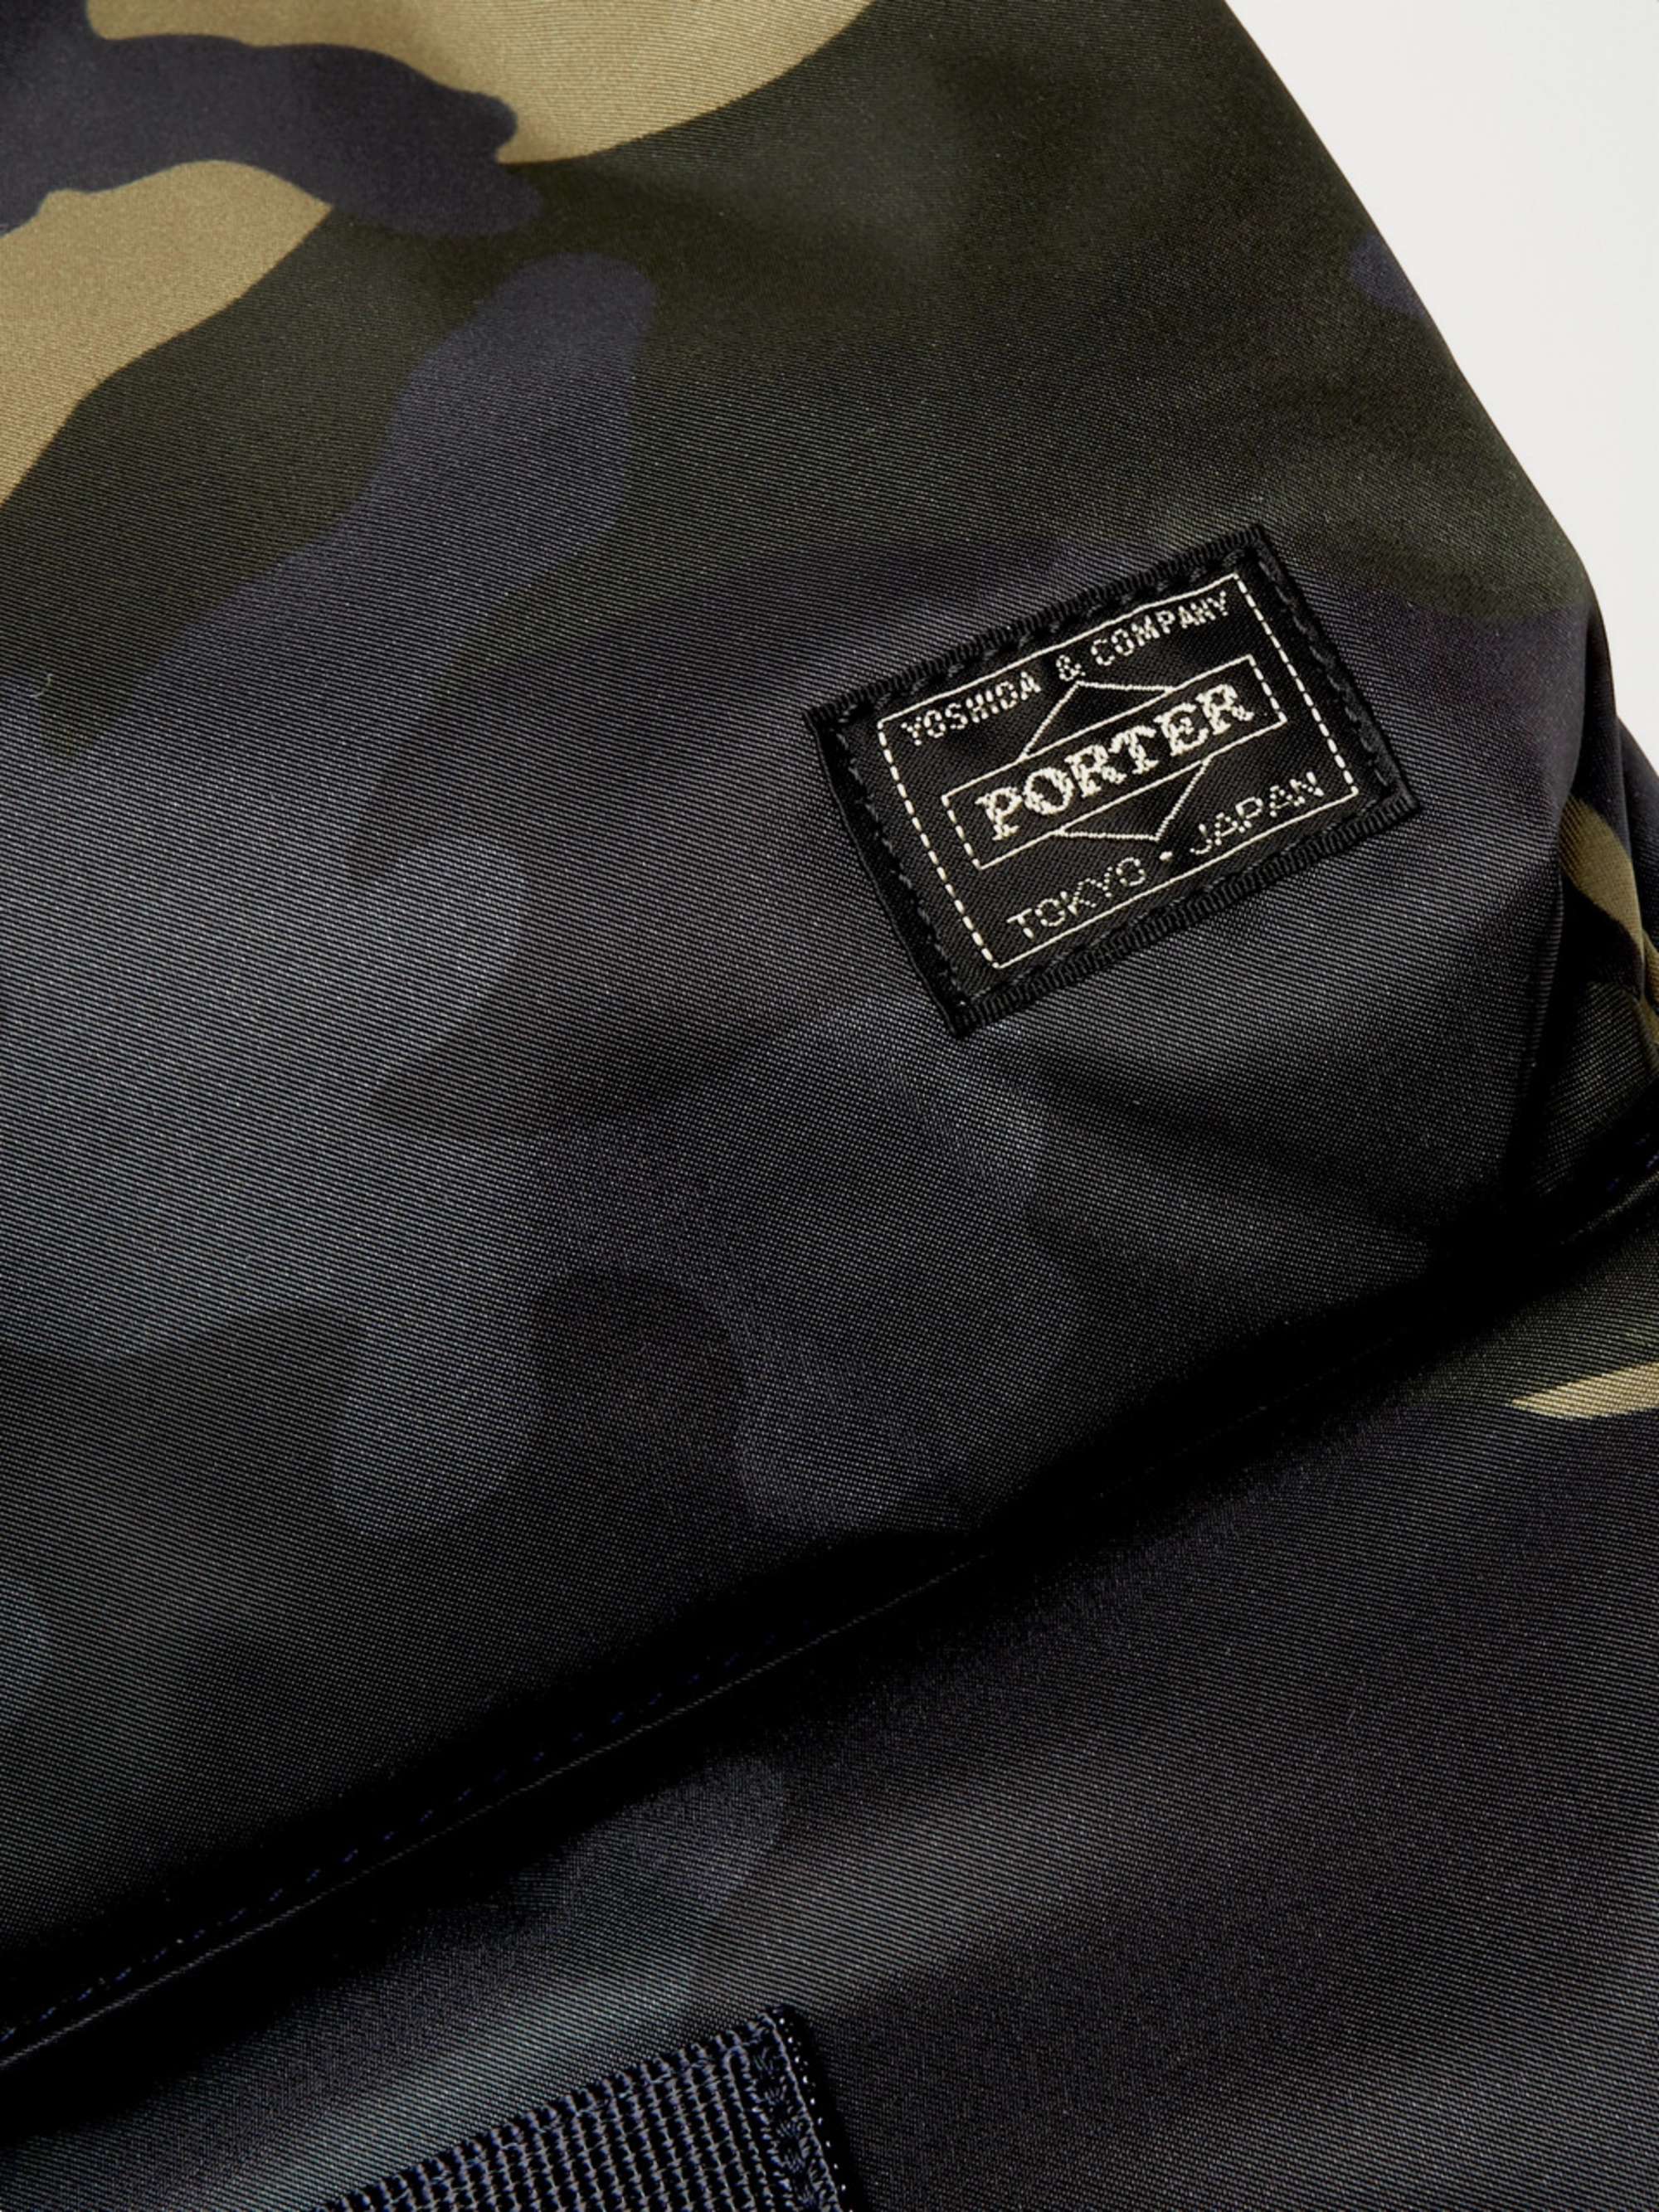 PORTER-YOSHIDA & CO Counter Shade Camouflage-Print Nylon Tote Bag